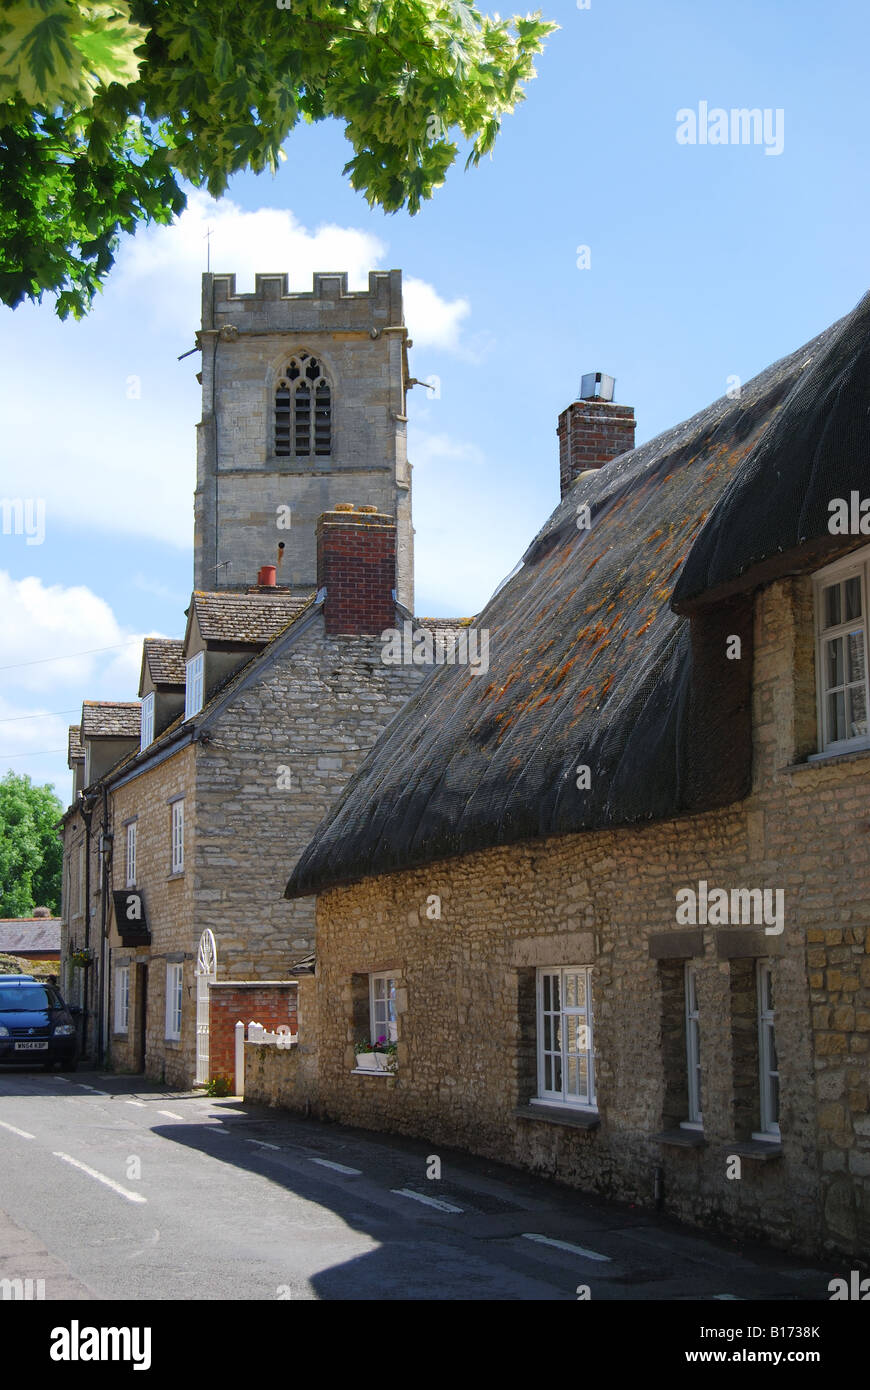 The Parish Church of St. Leonard's and cottages, Eynsham, Cotswolds, Oxfordshire, England, United Kingdom Stock Photo